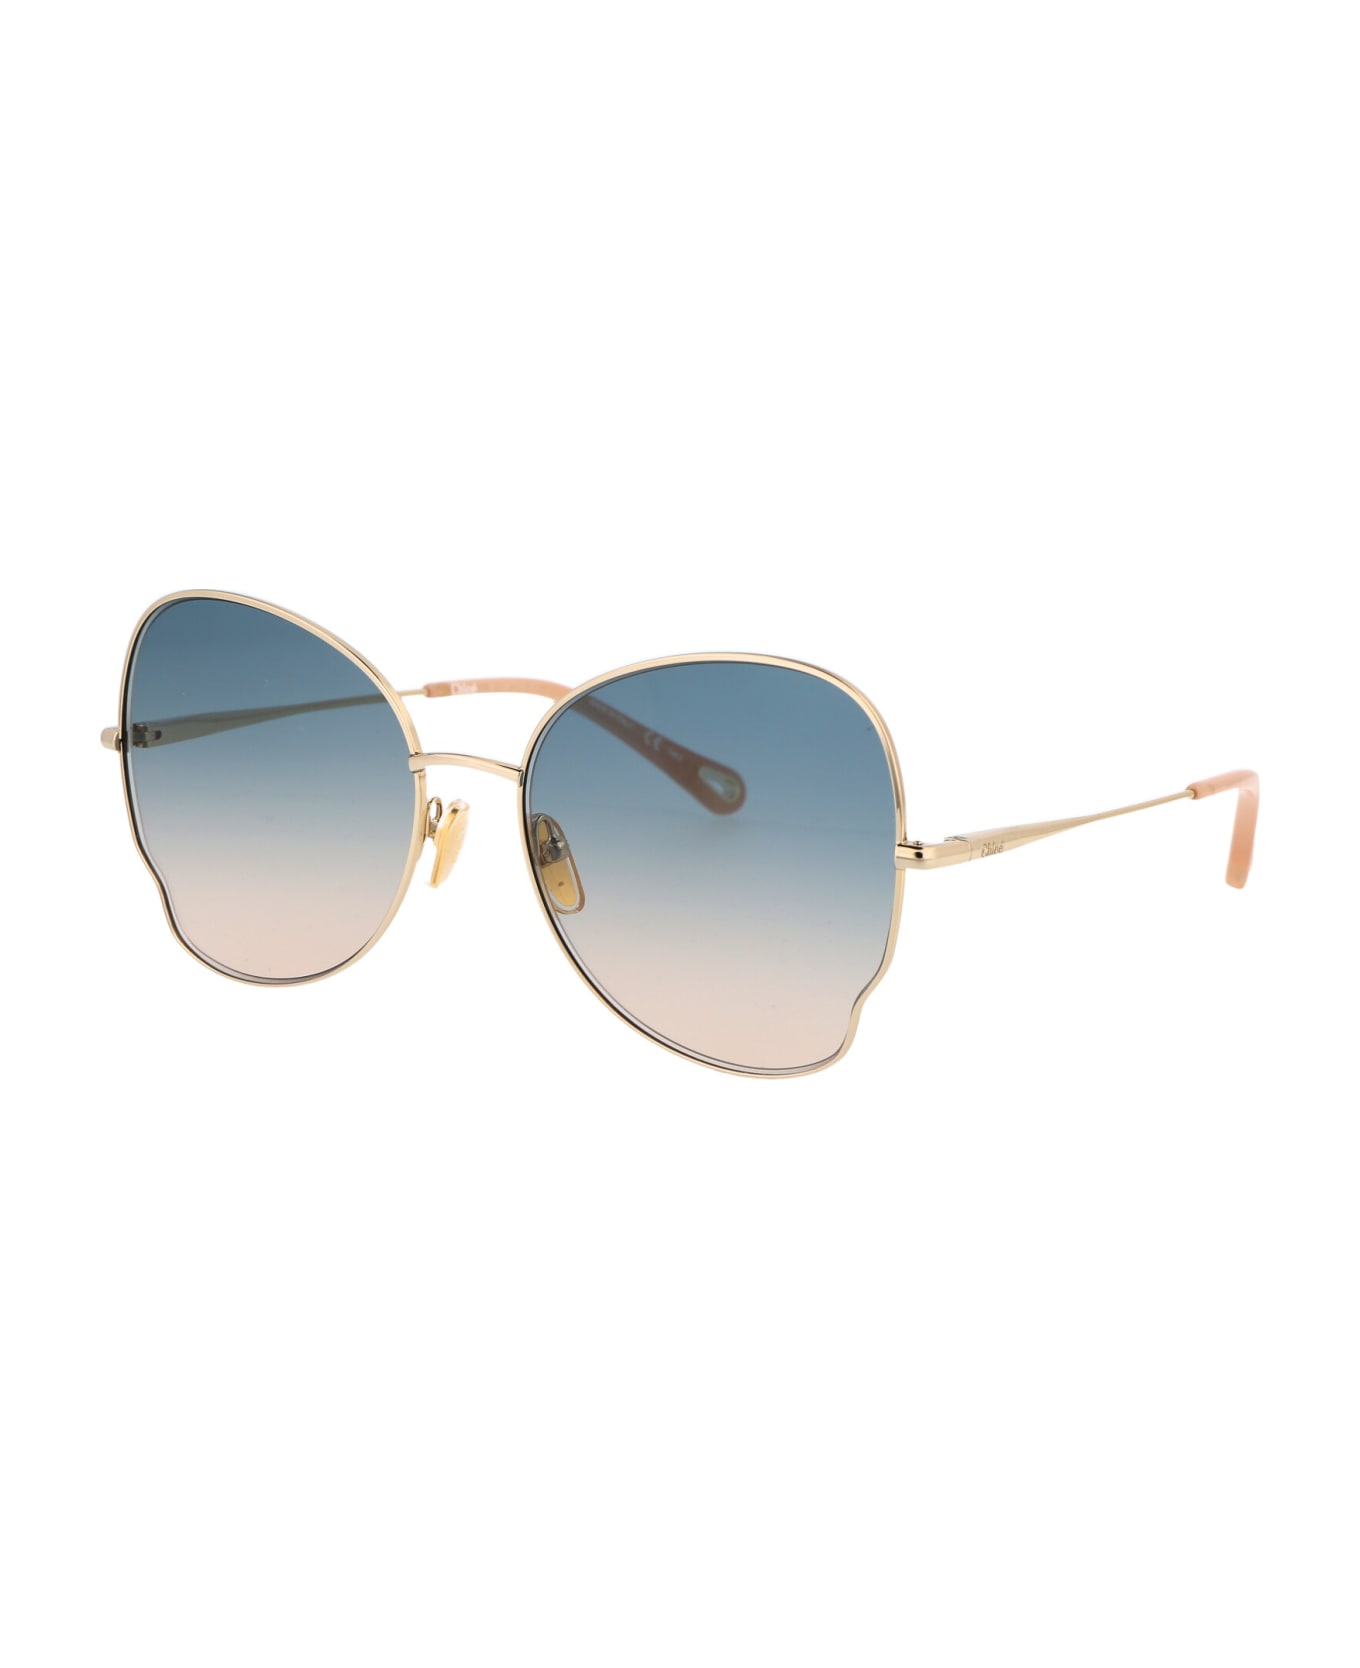 Chloé Eyewear Ch0094s Sunglasses - 003 GOLD GOLD GREEN サングラス